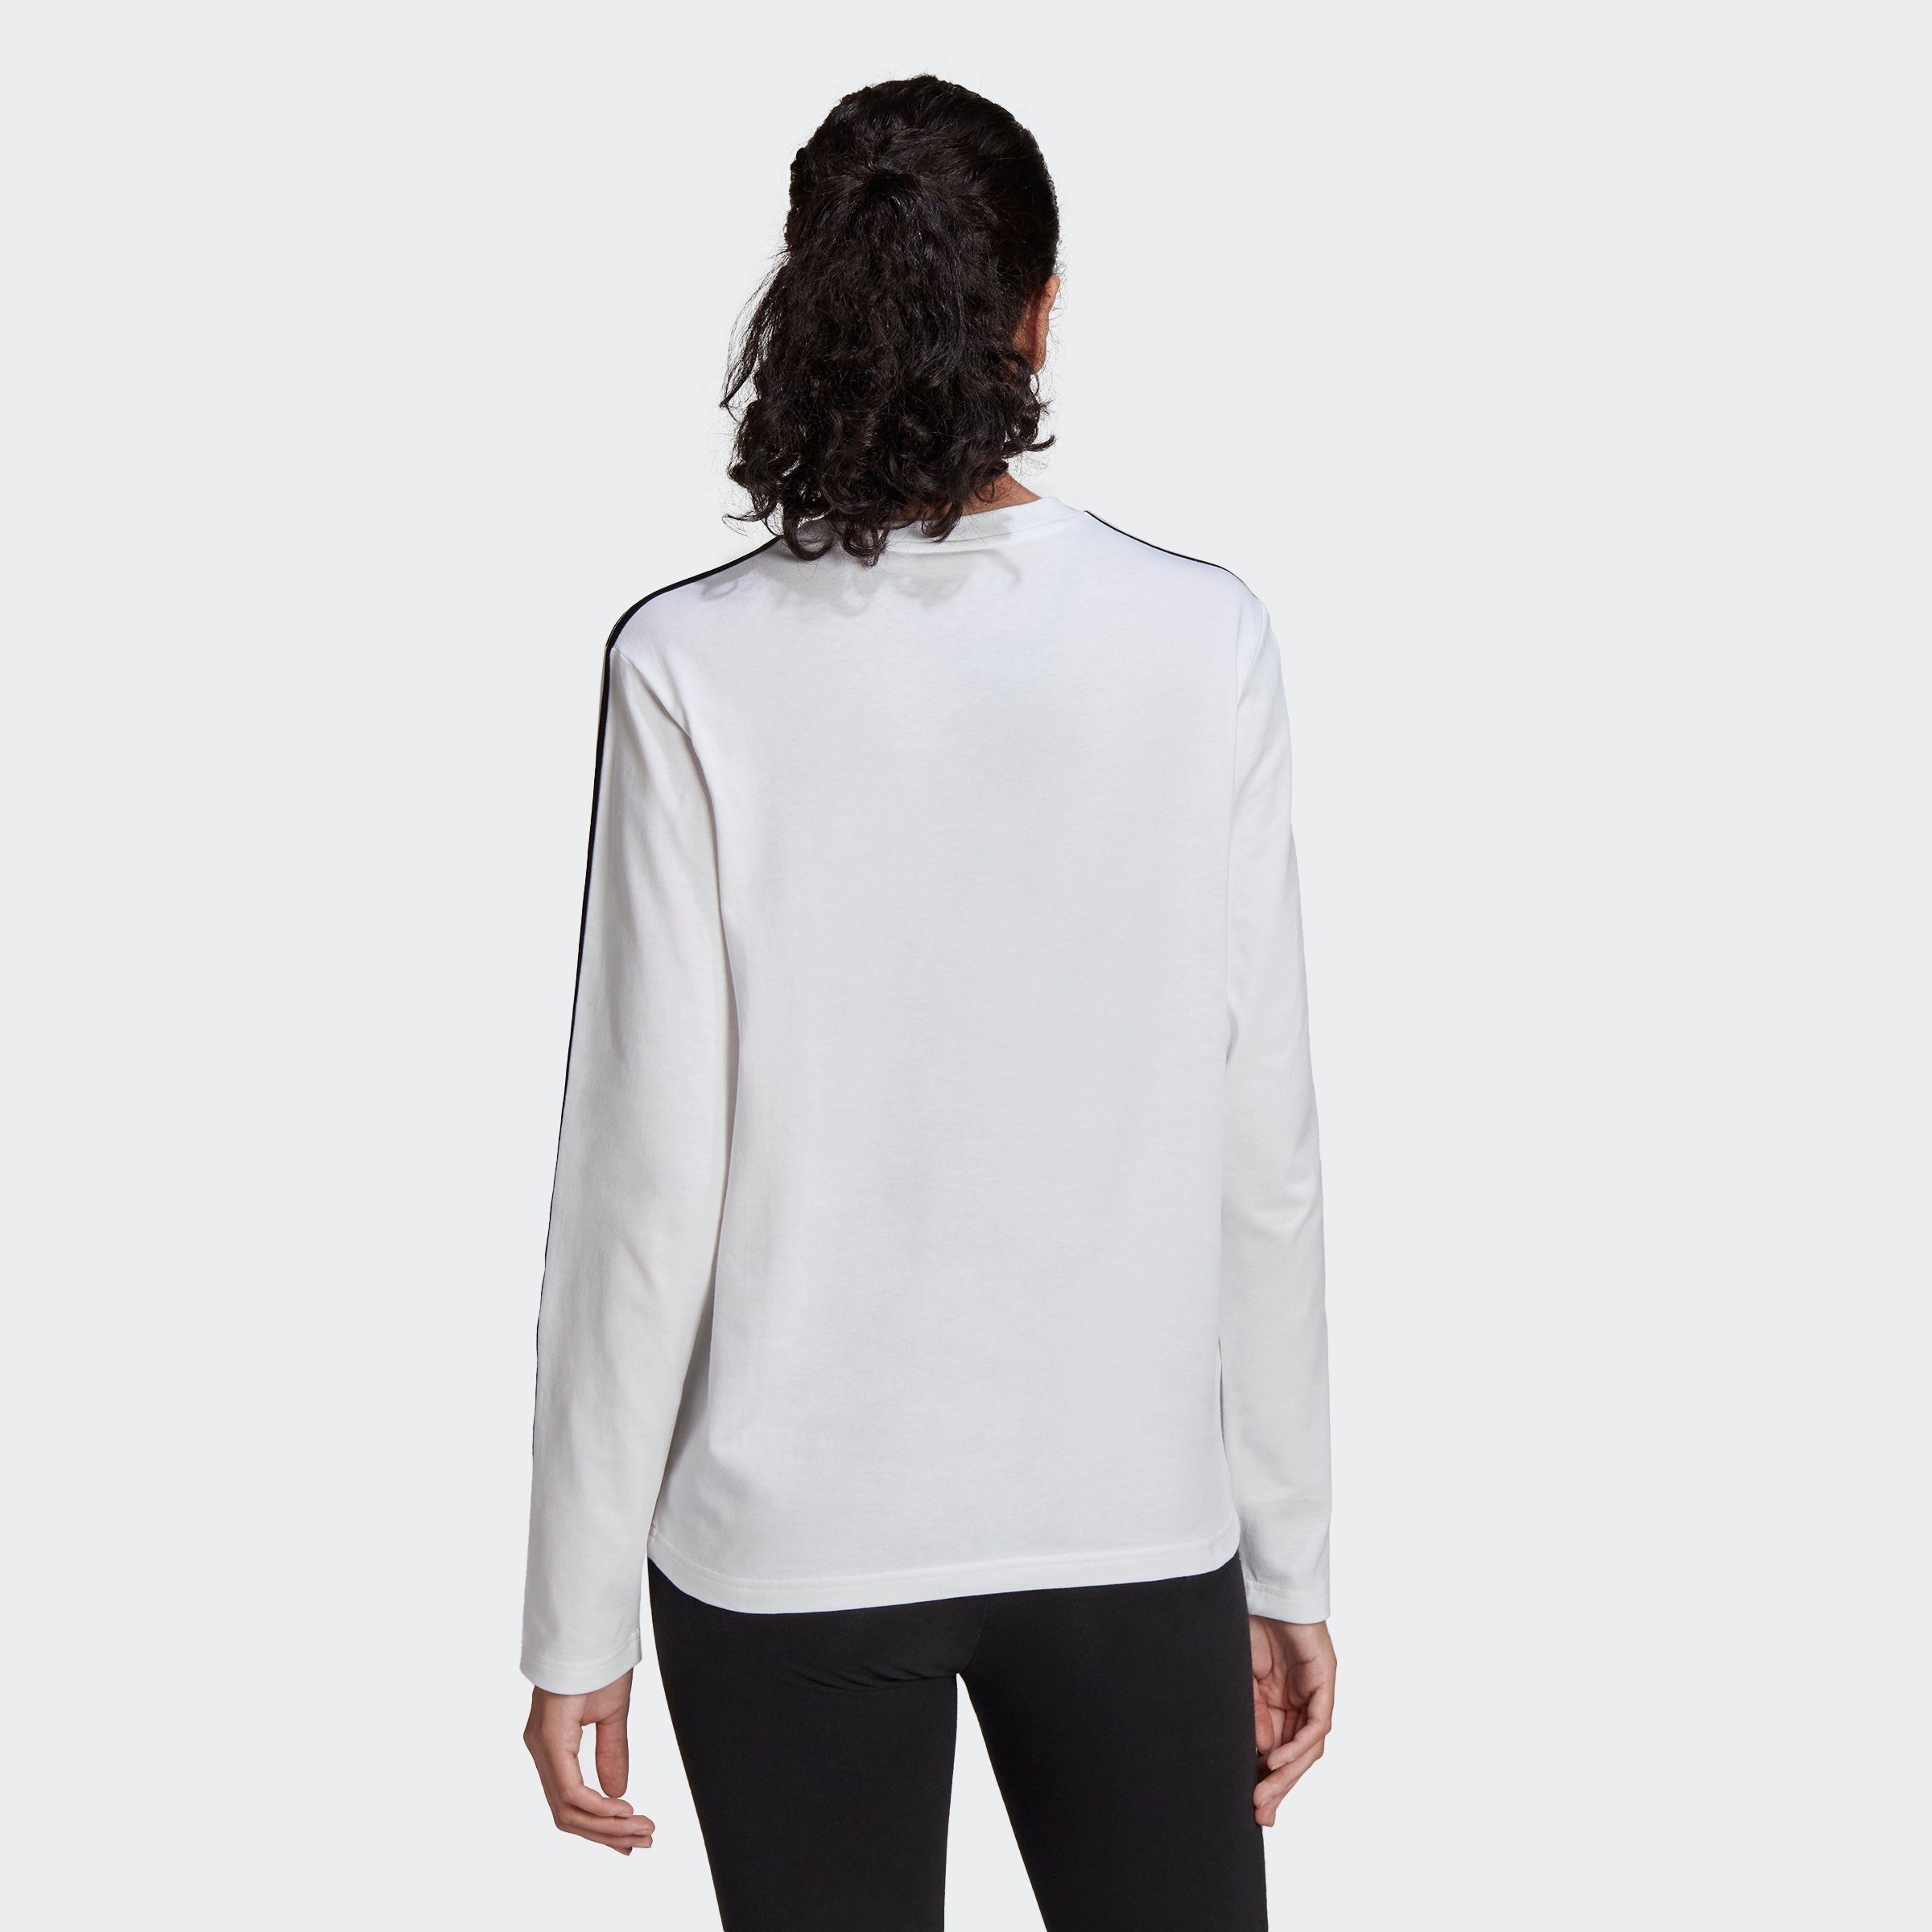 Langarmshirt 3STREIFEN LONGSLEEVE Sportswear adidas ESSENTIALS WHITE/BLACK